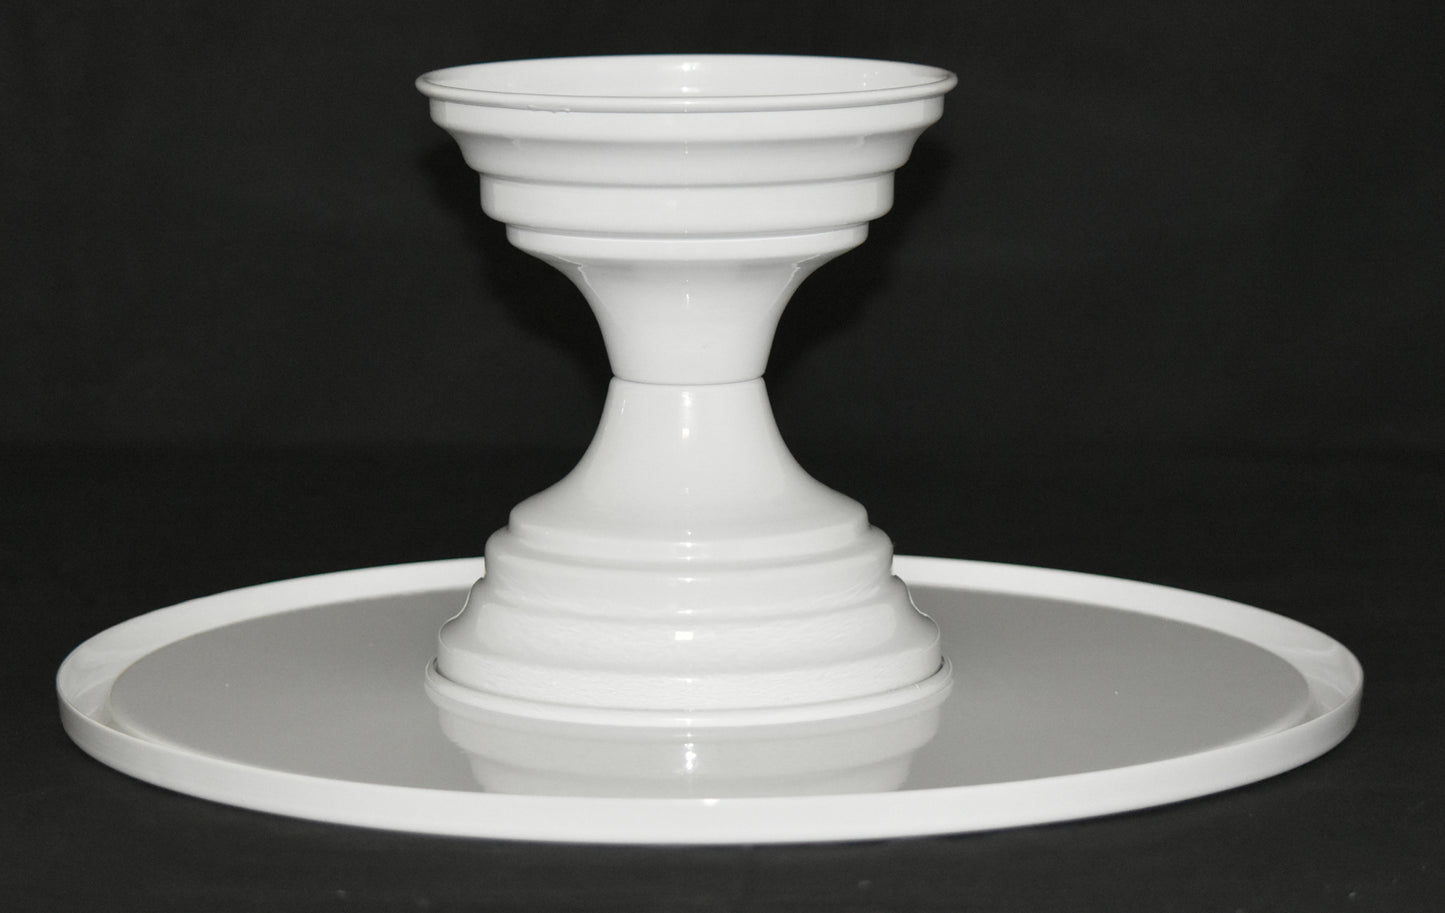 GiftBay Creations® Pedestal Cake Stand 13" Diameter (Top) Metal (White)